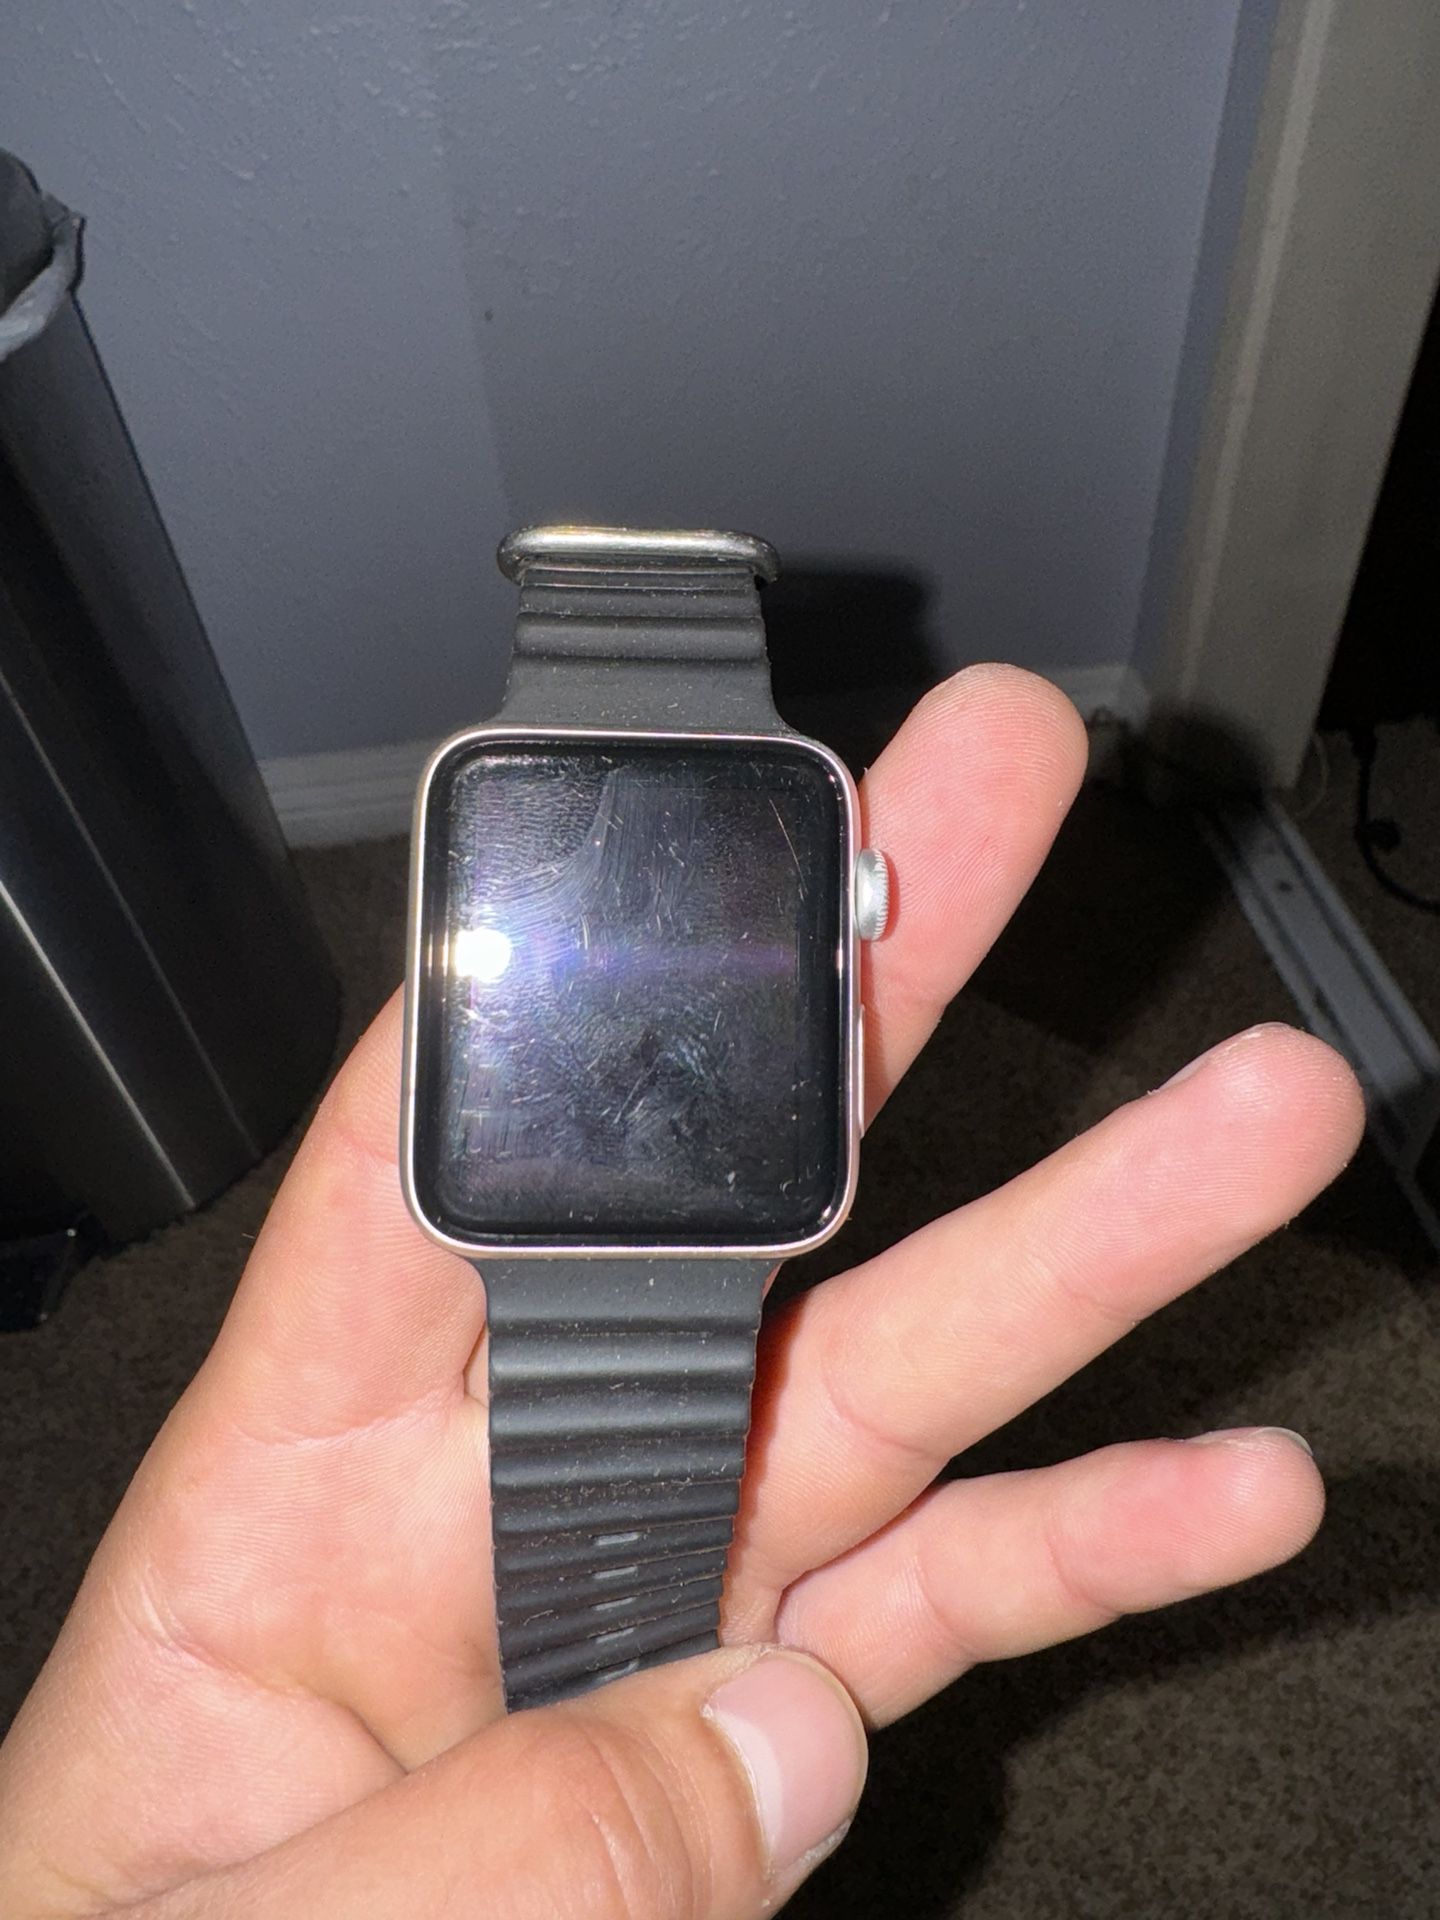 Apple Watch Series 2 